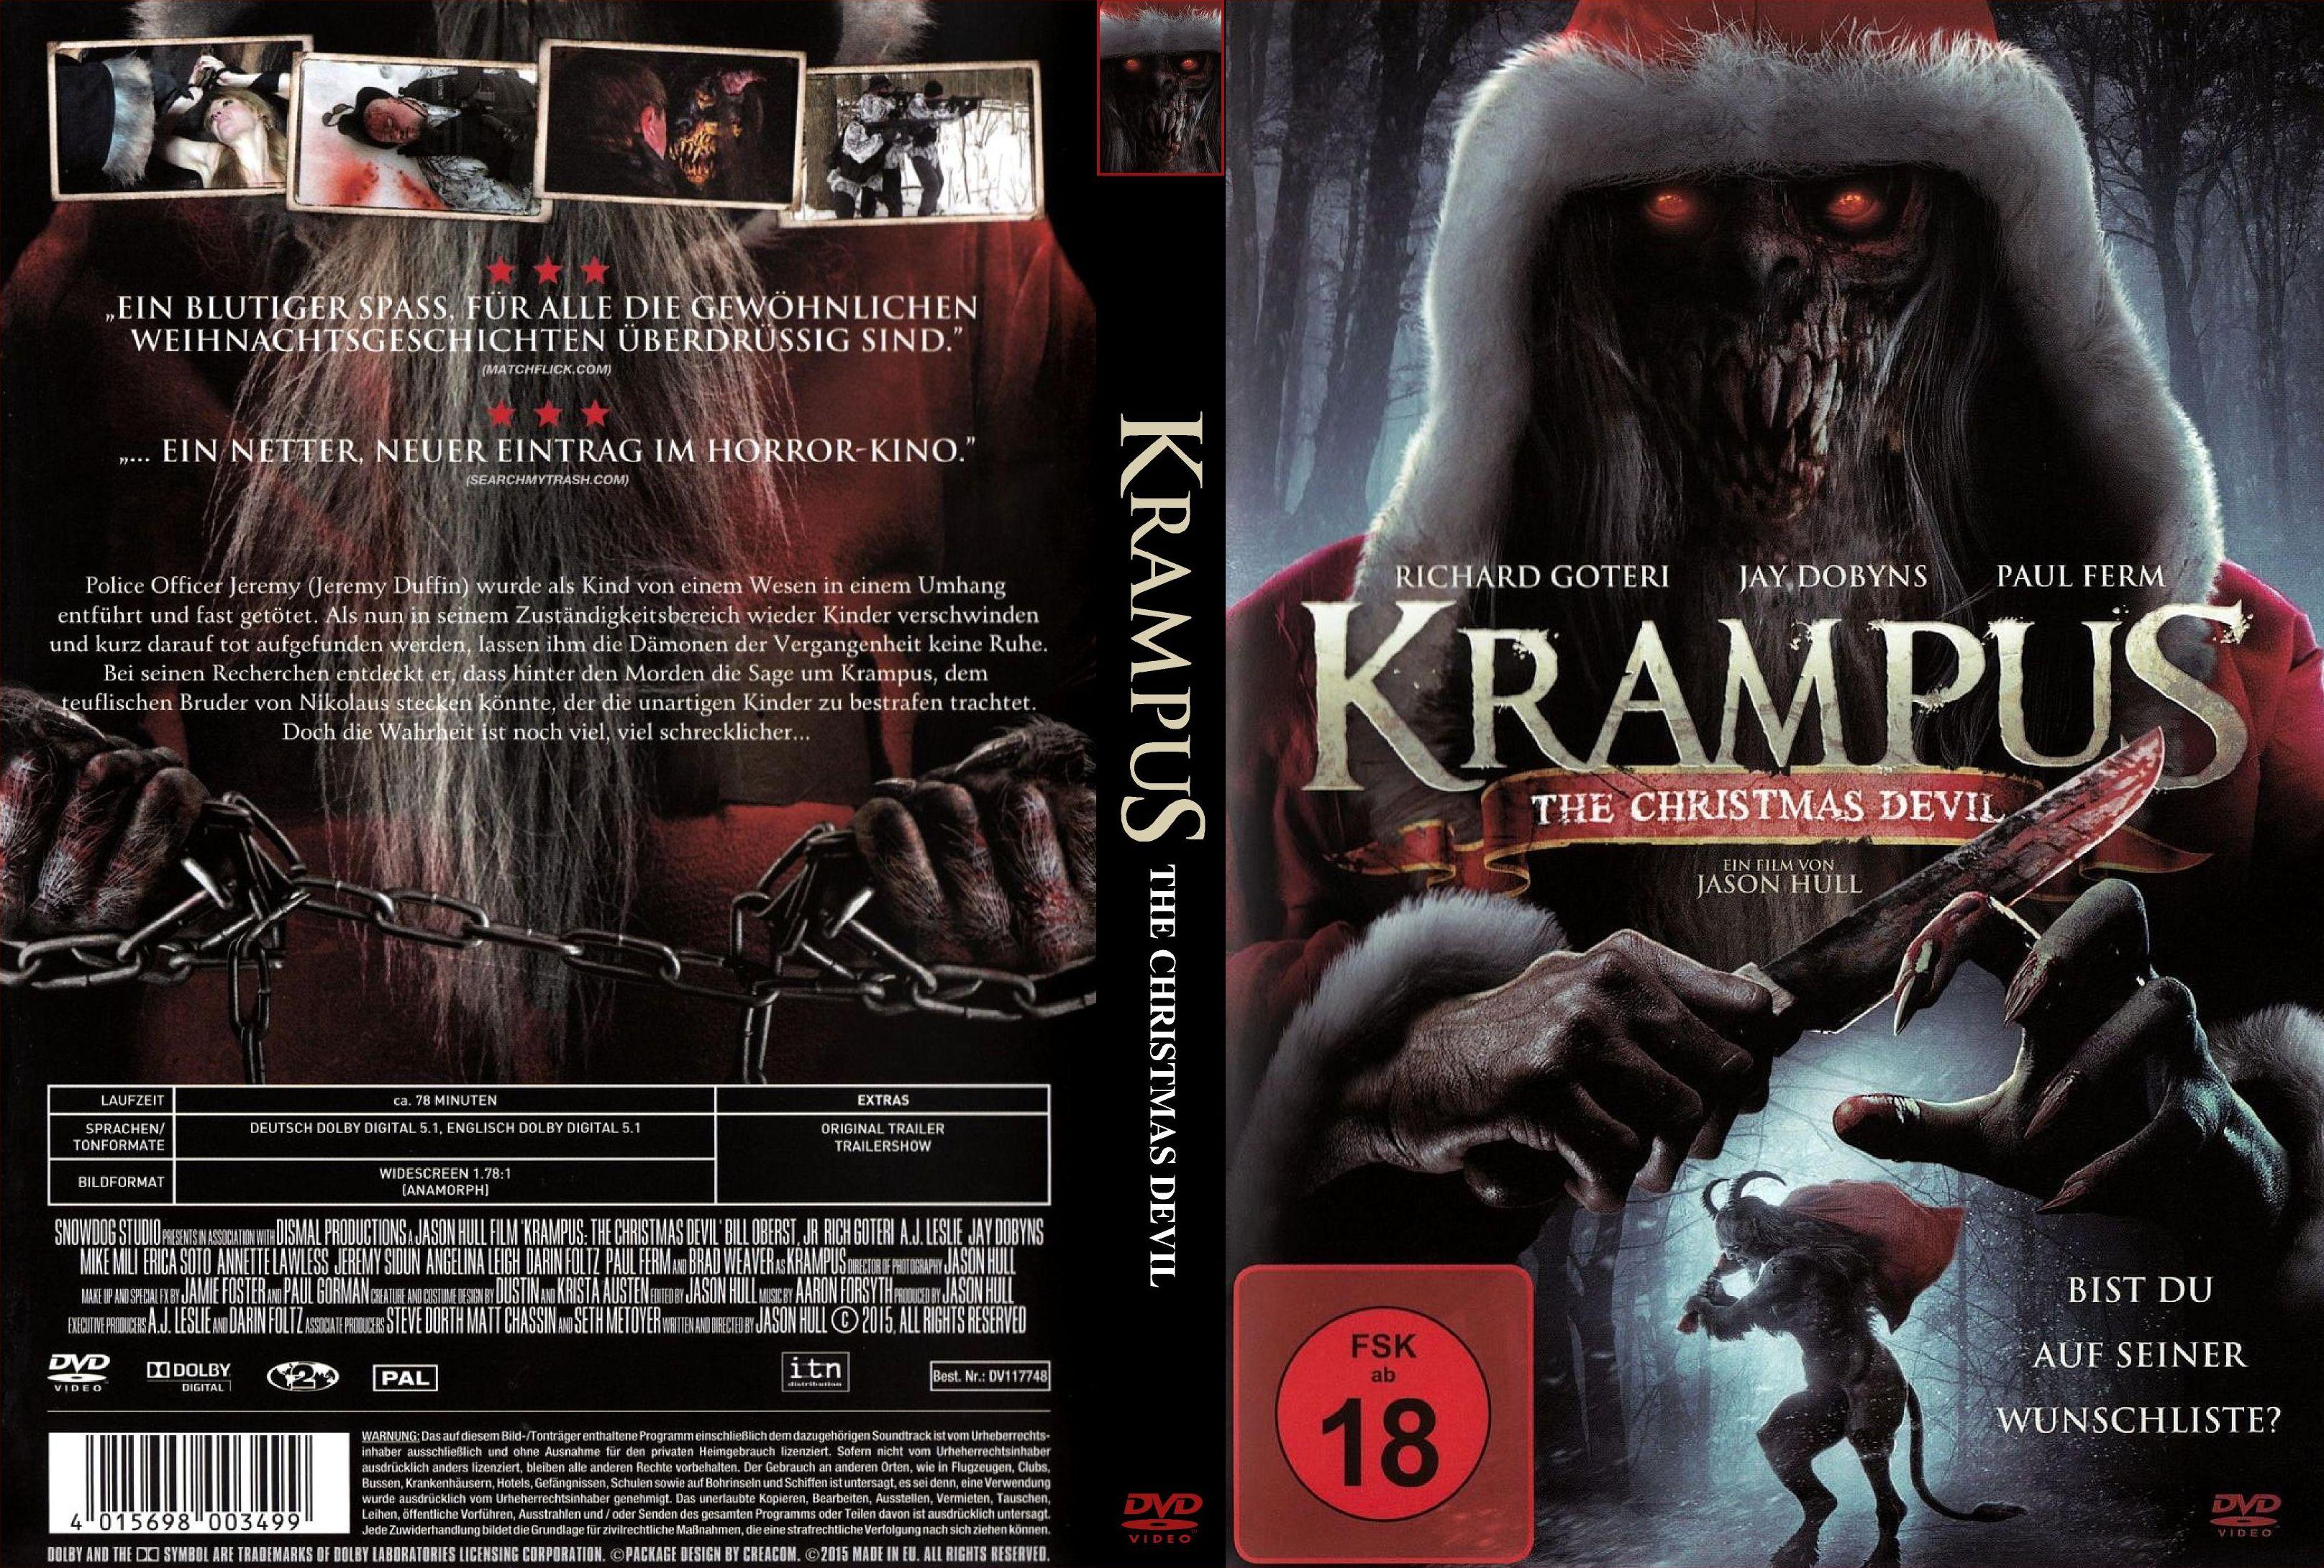 Krampus: The Christmas Devil #10